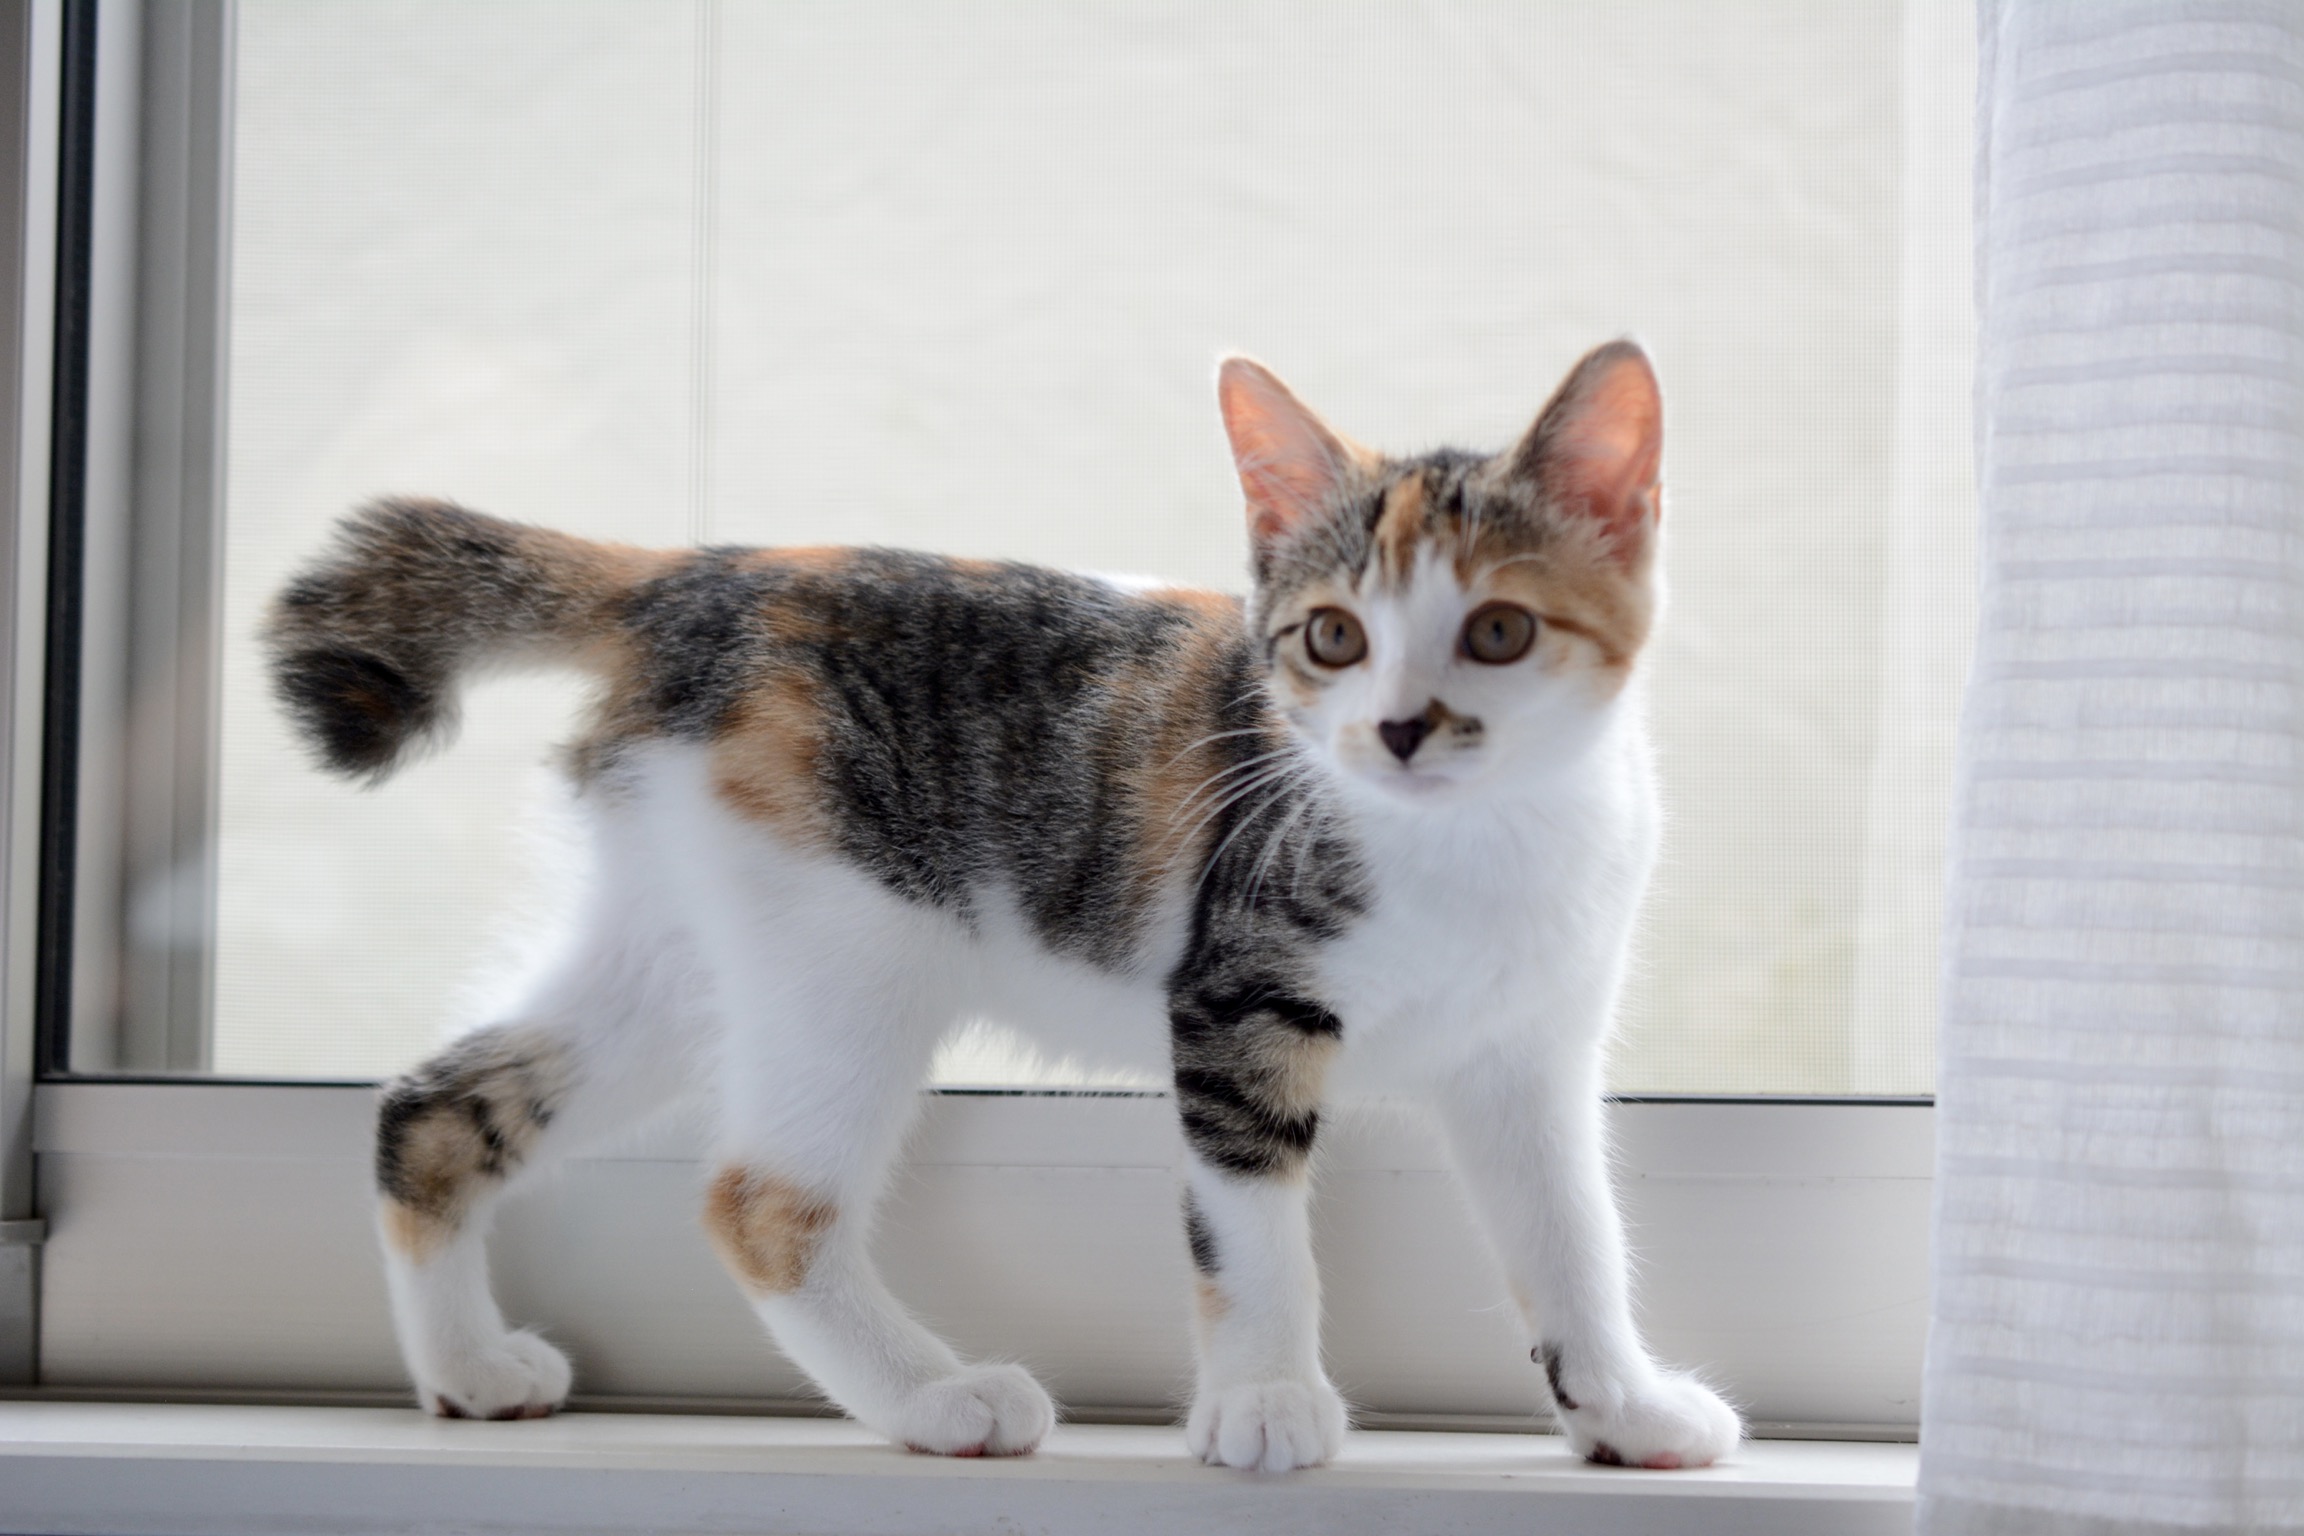 Fip 猫伝染性腹膜炎 の治療薬についてわかってきたこと 猫専門病院の猫ブログ Nekopedia ネコペディア